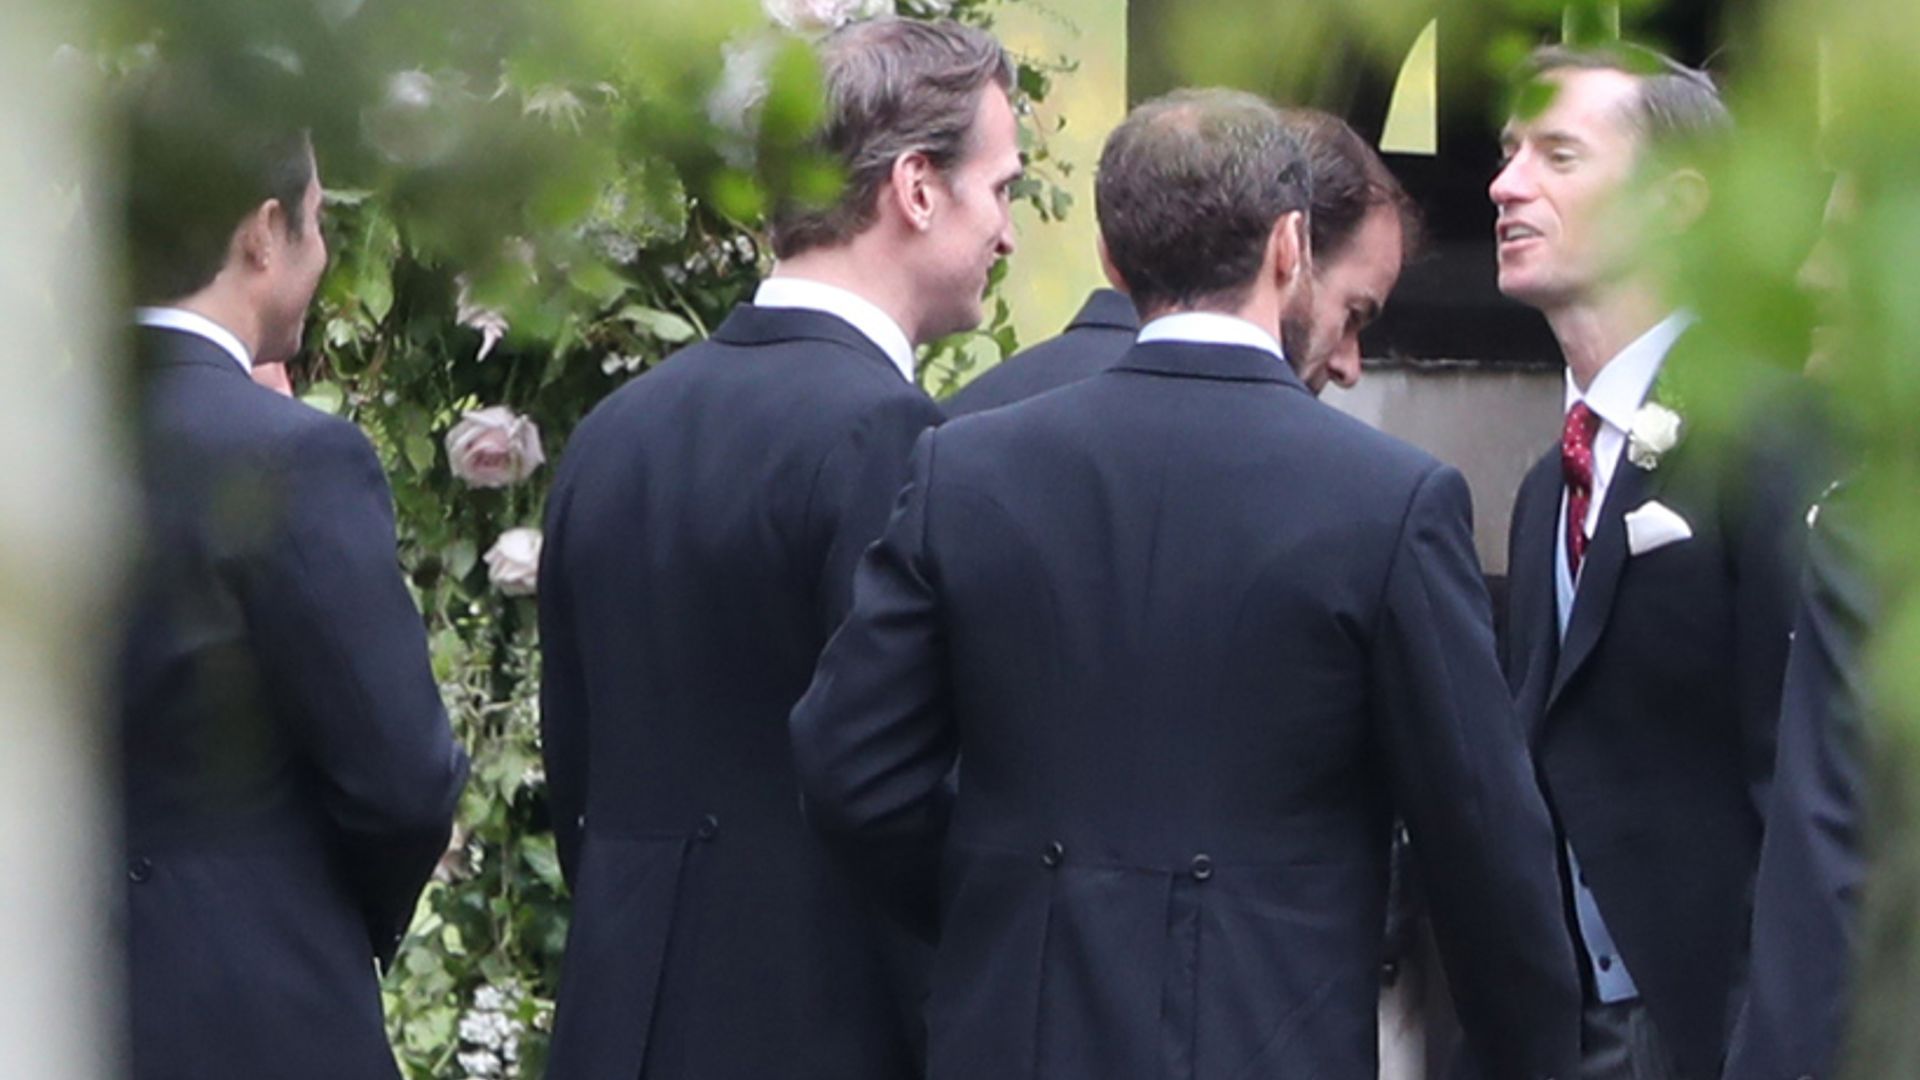 James Matthews arrives at church with groomsmen for Pippa Middleton wedding